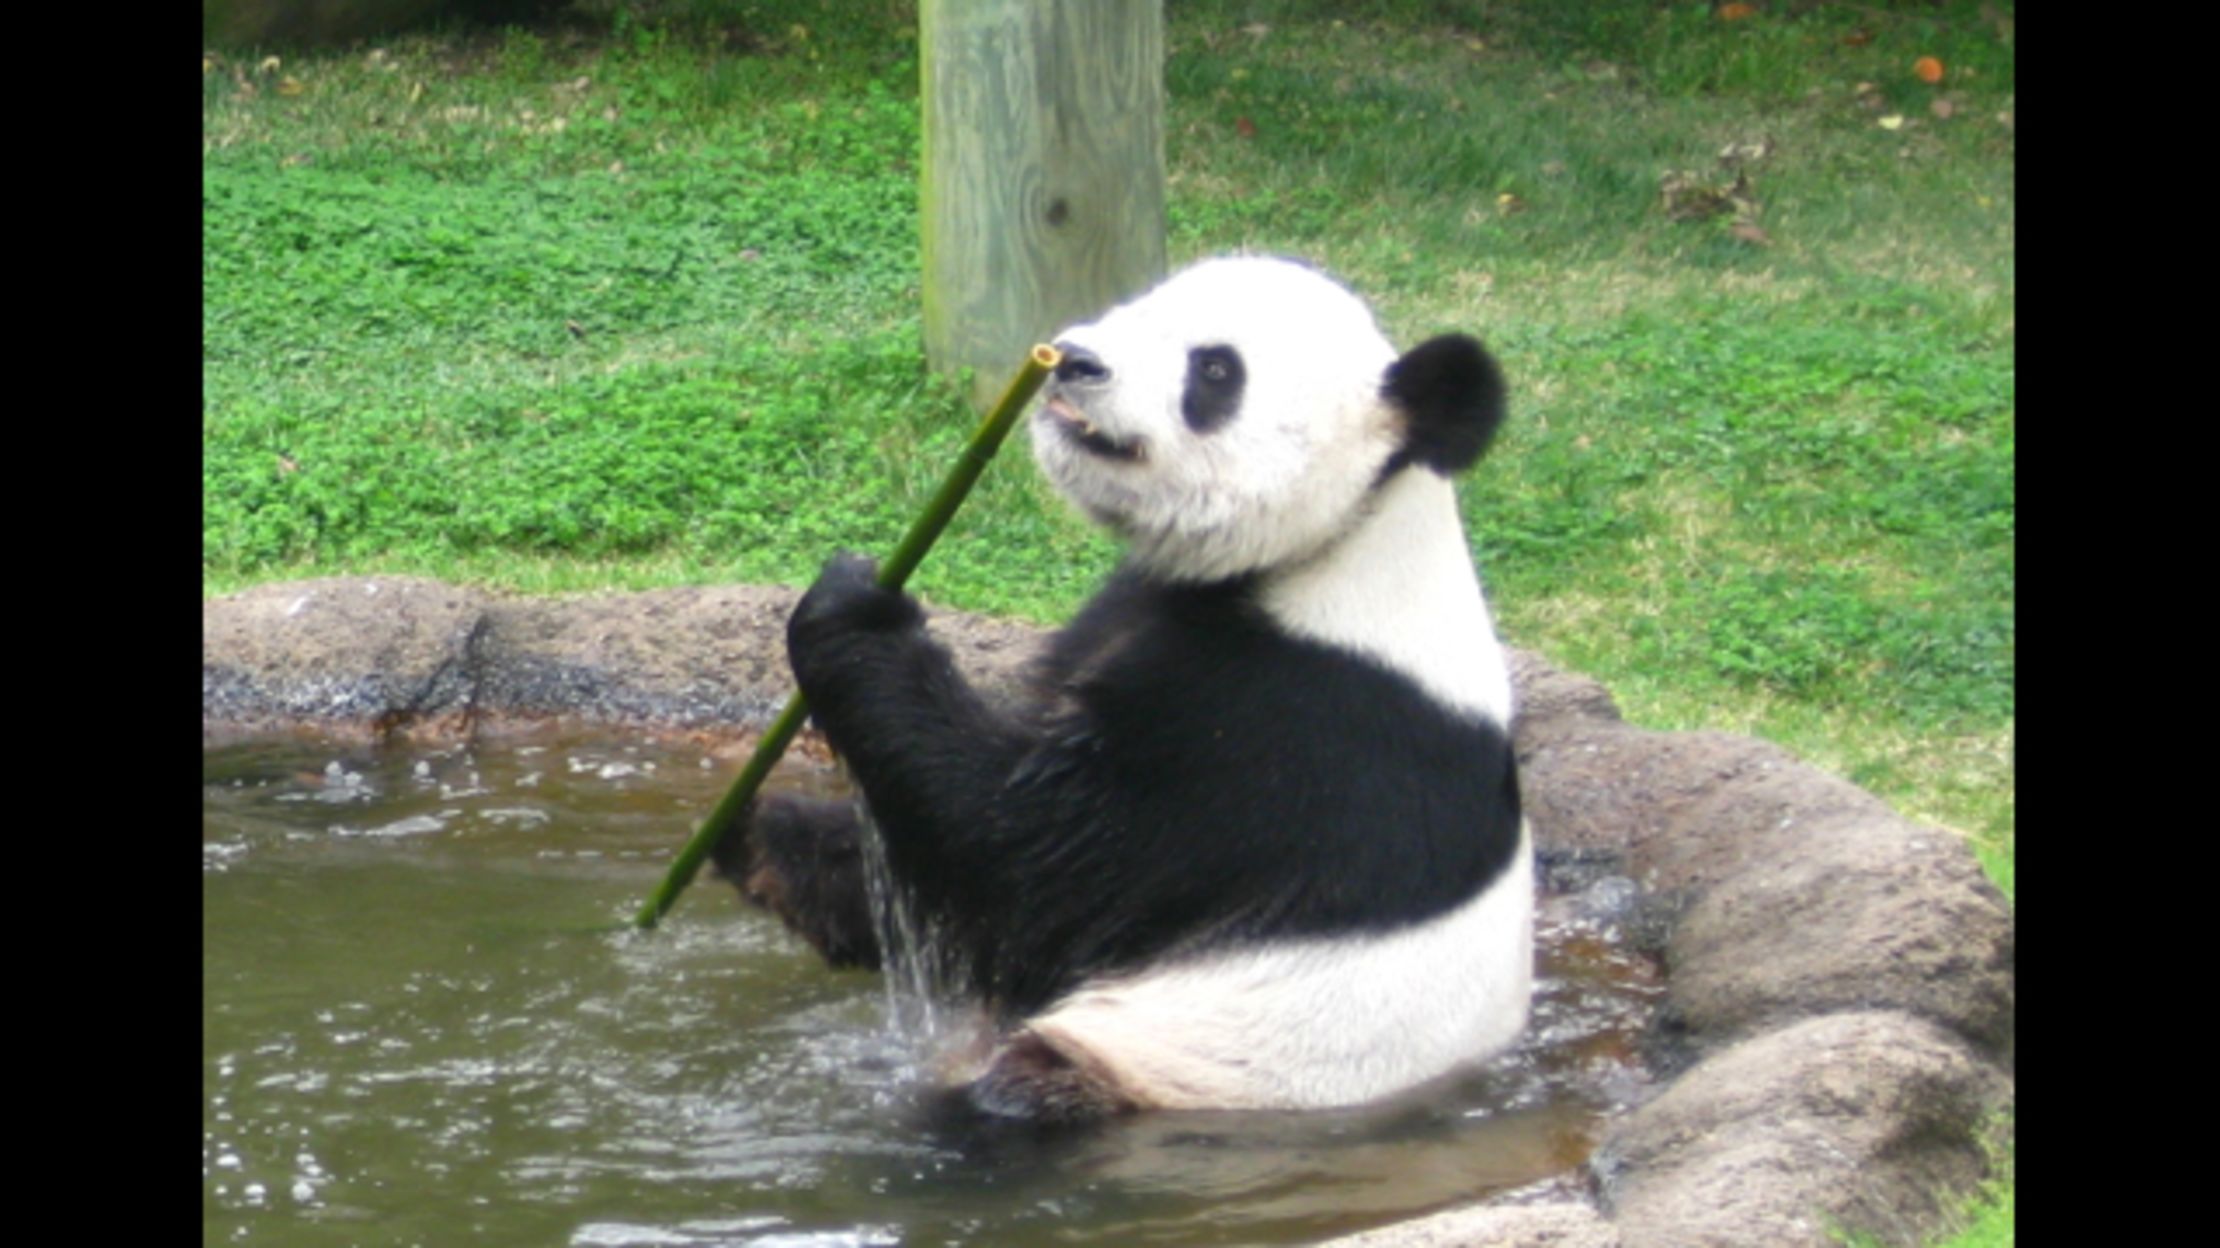 panda pau06 on a beaglebone